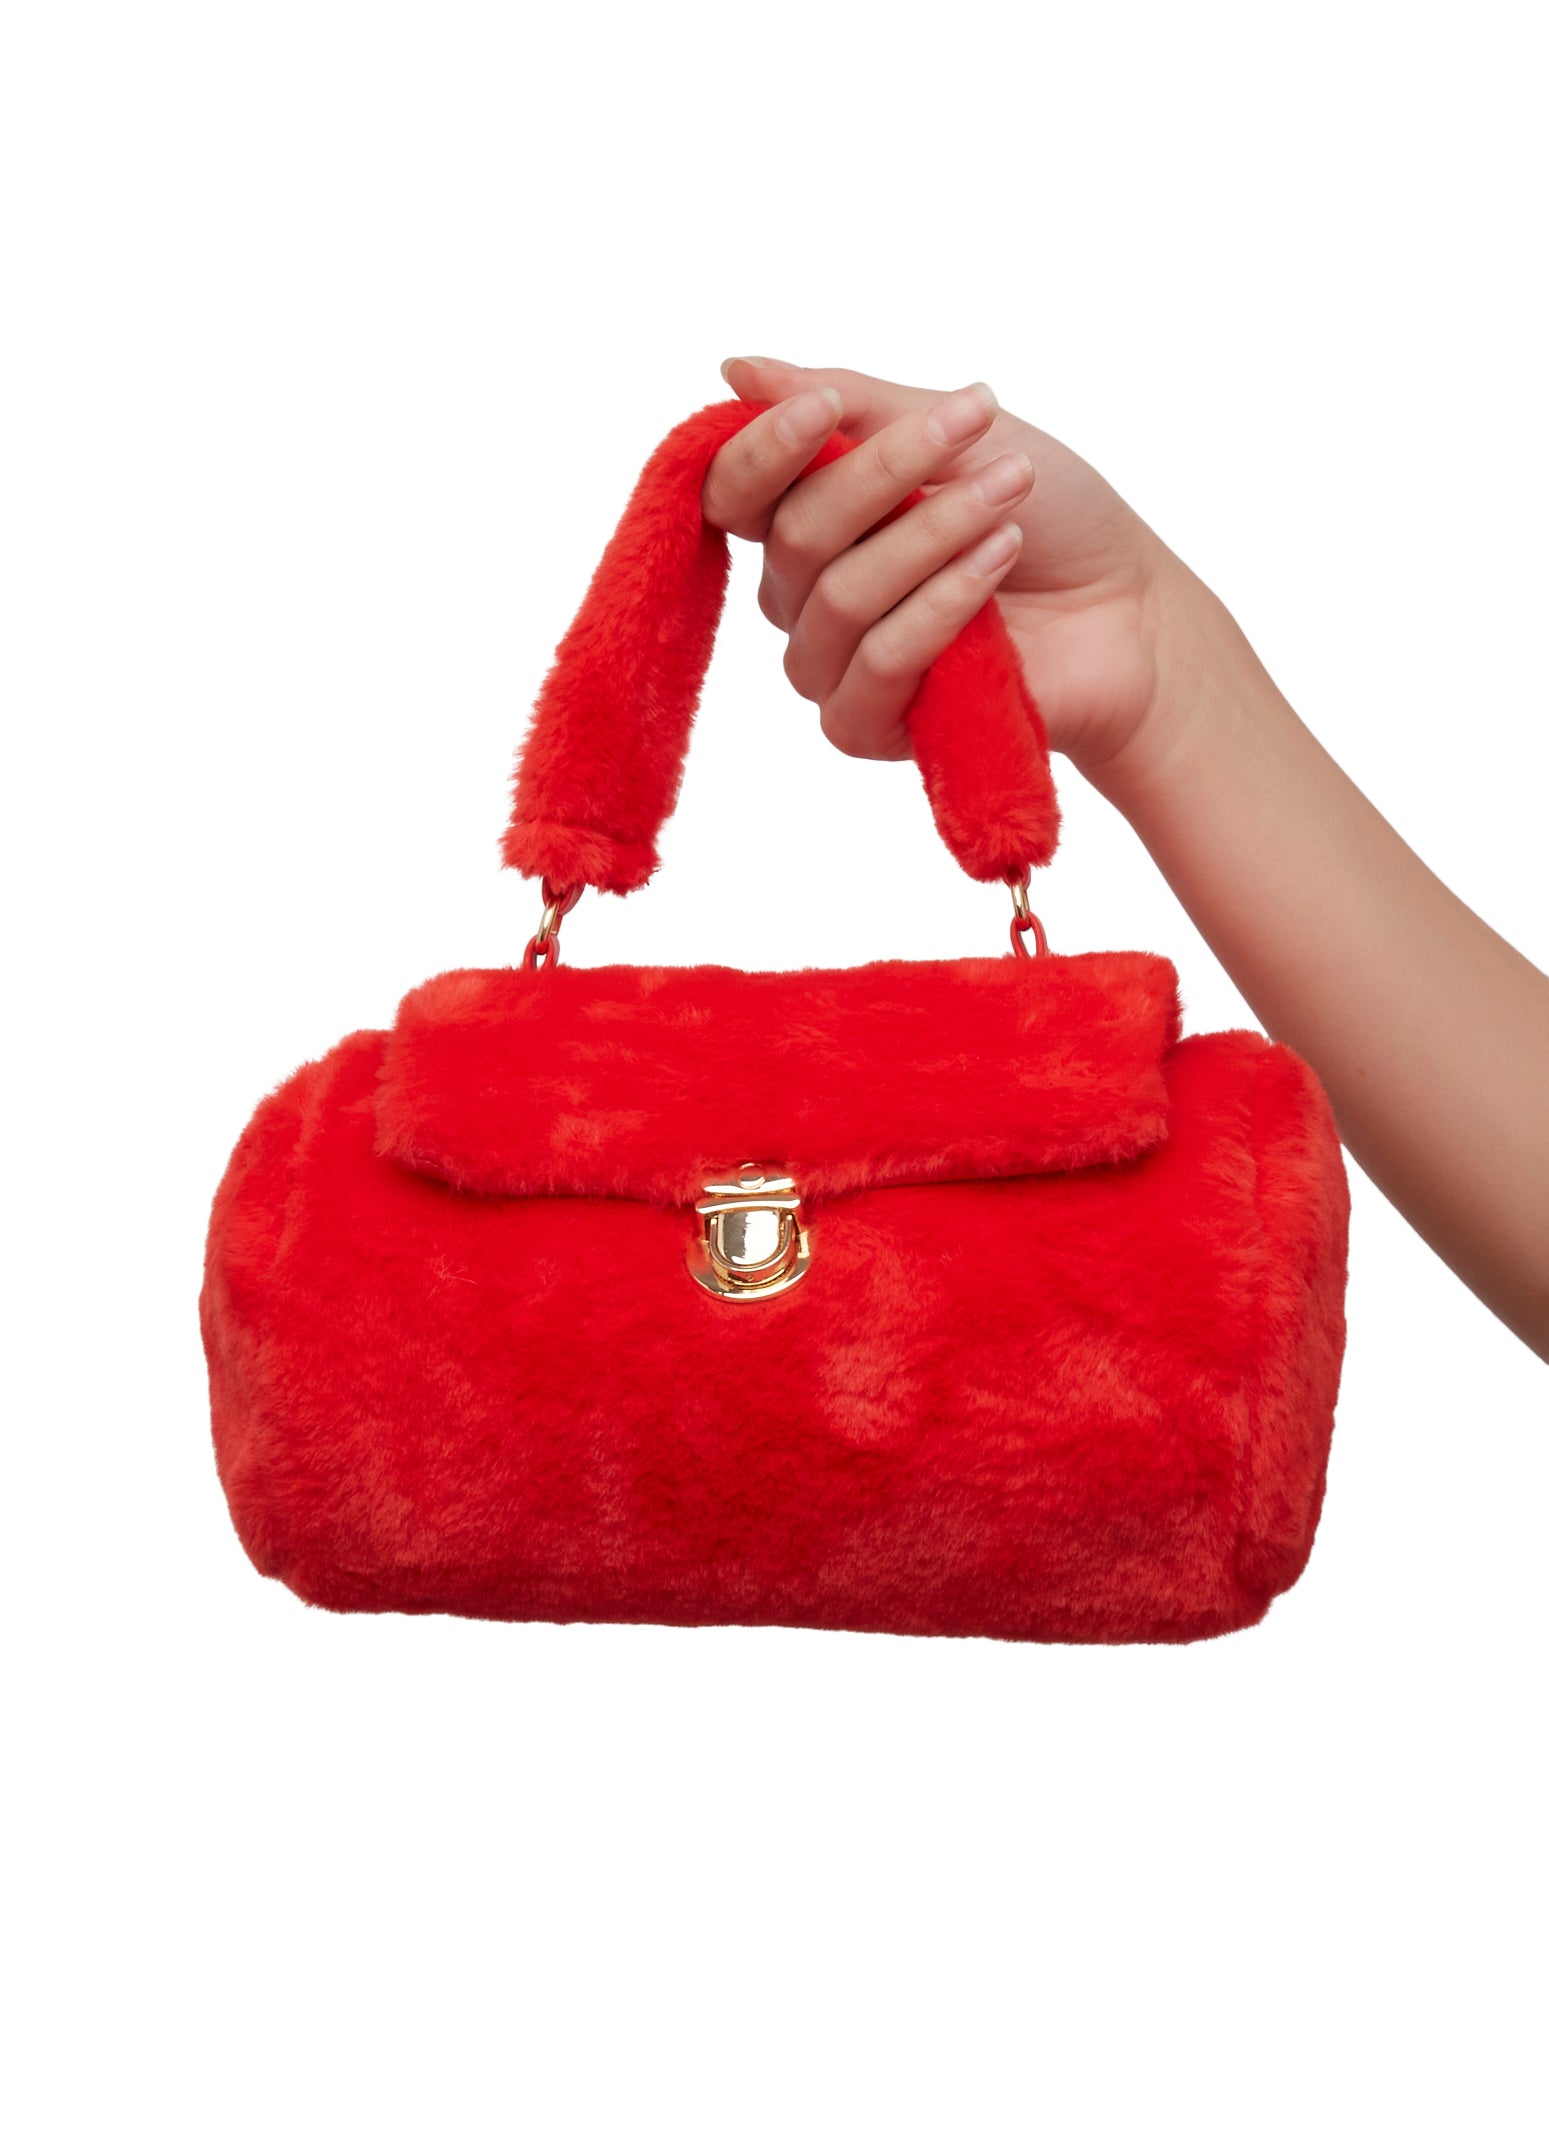 100% Real Angora goat Fur Handbag Womens Purse Wallet Bag Cross body  Shoulder | eBay